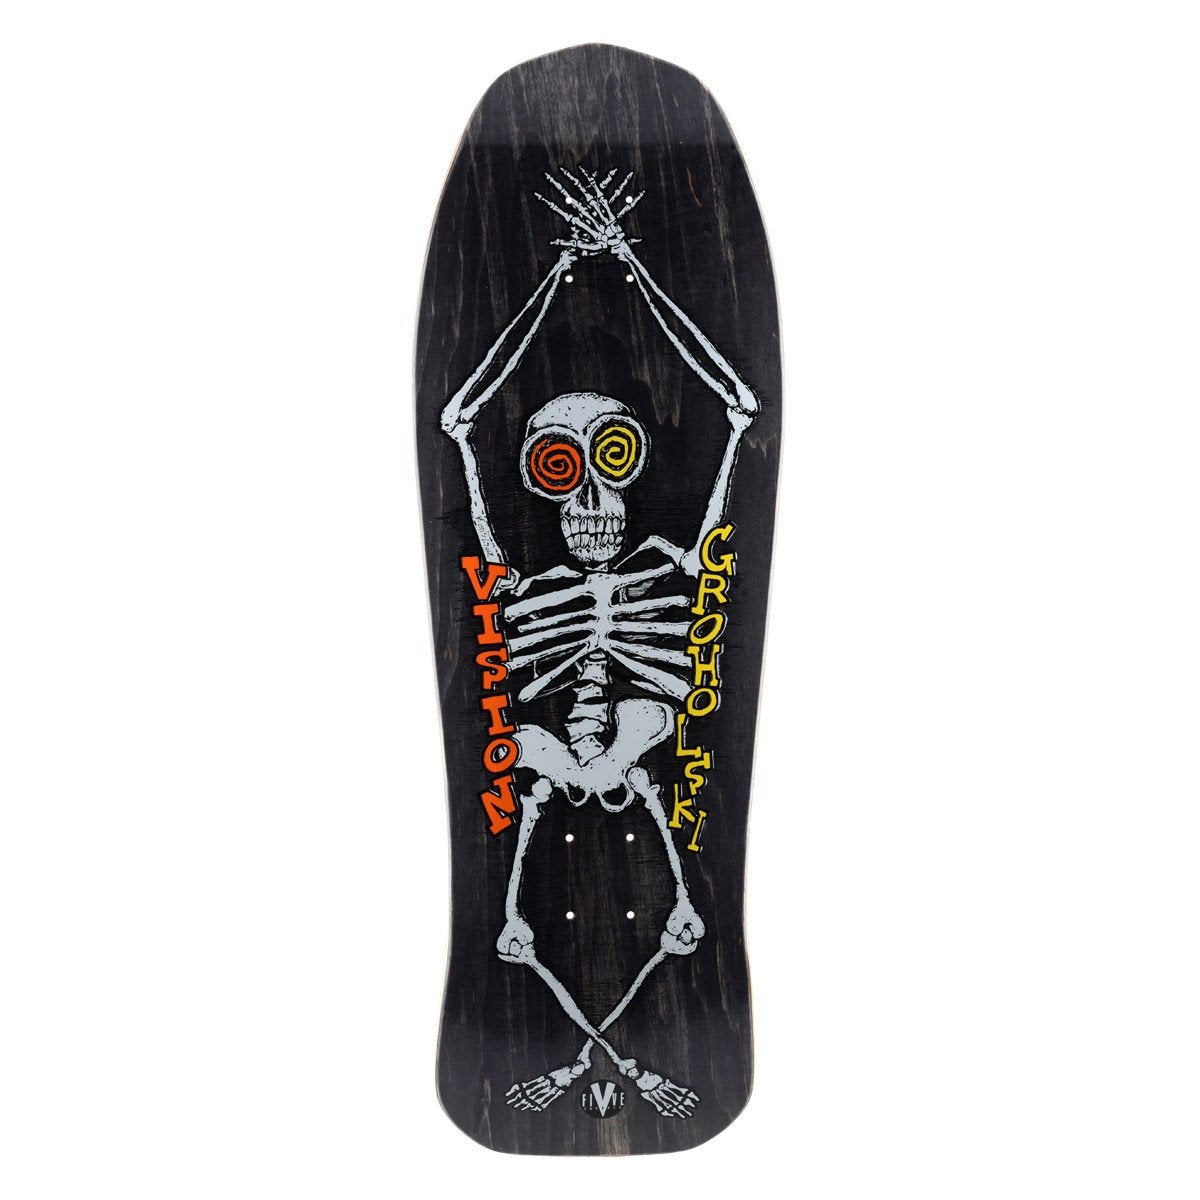 Vision Groholski Skeleton Deck - 10.25"x30" / Black Stain